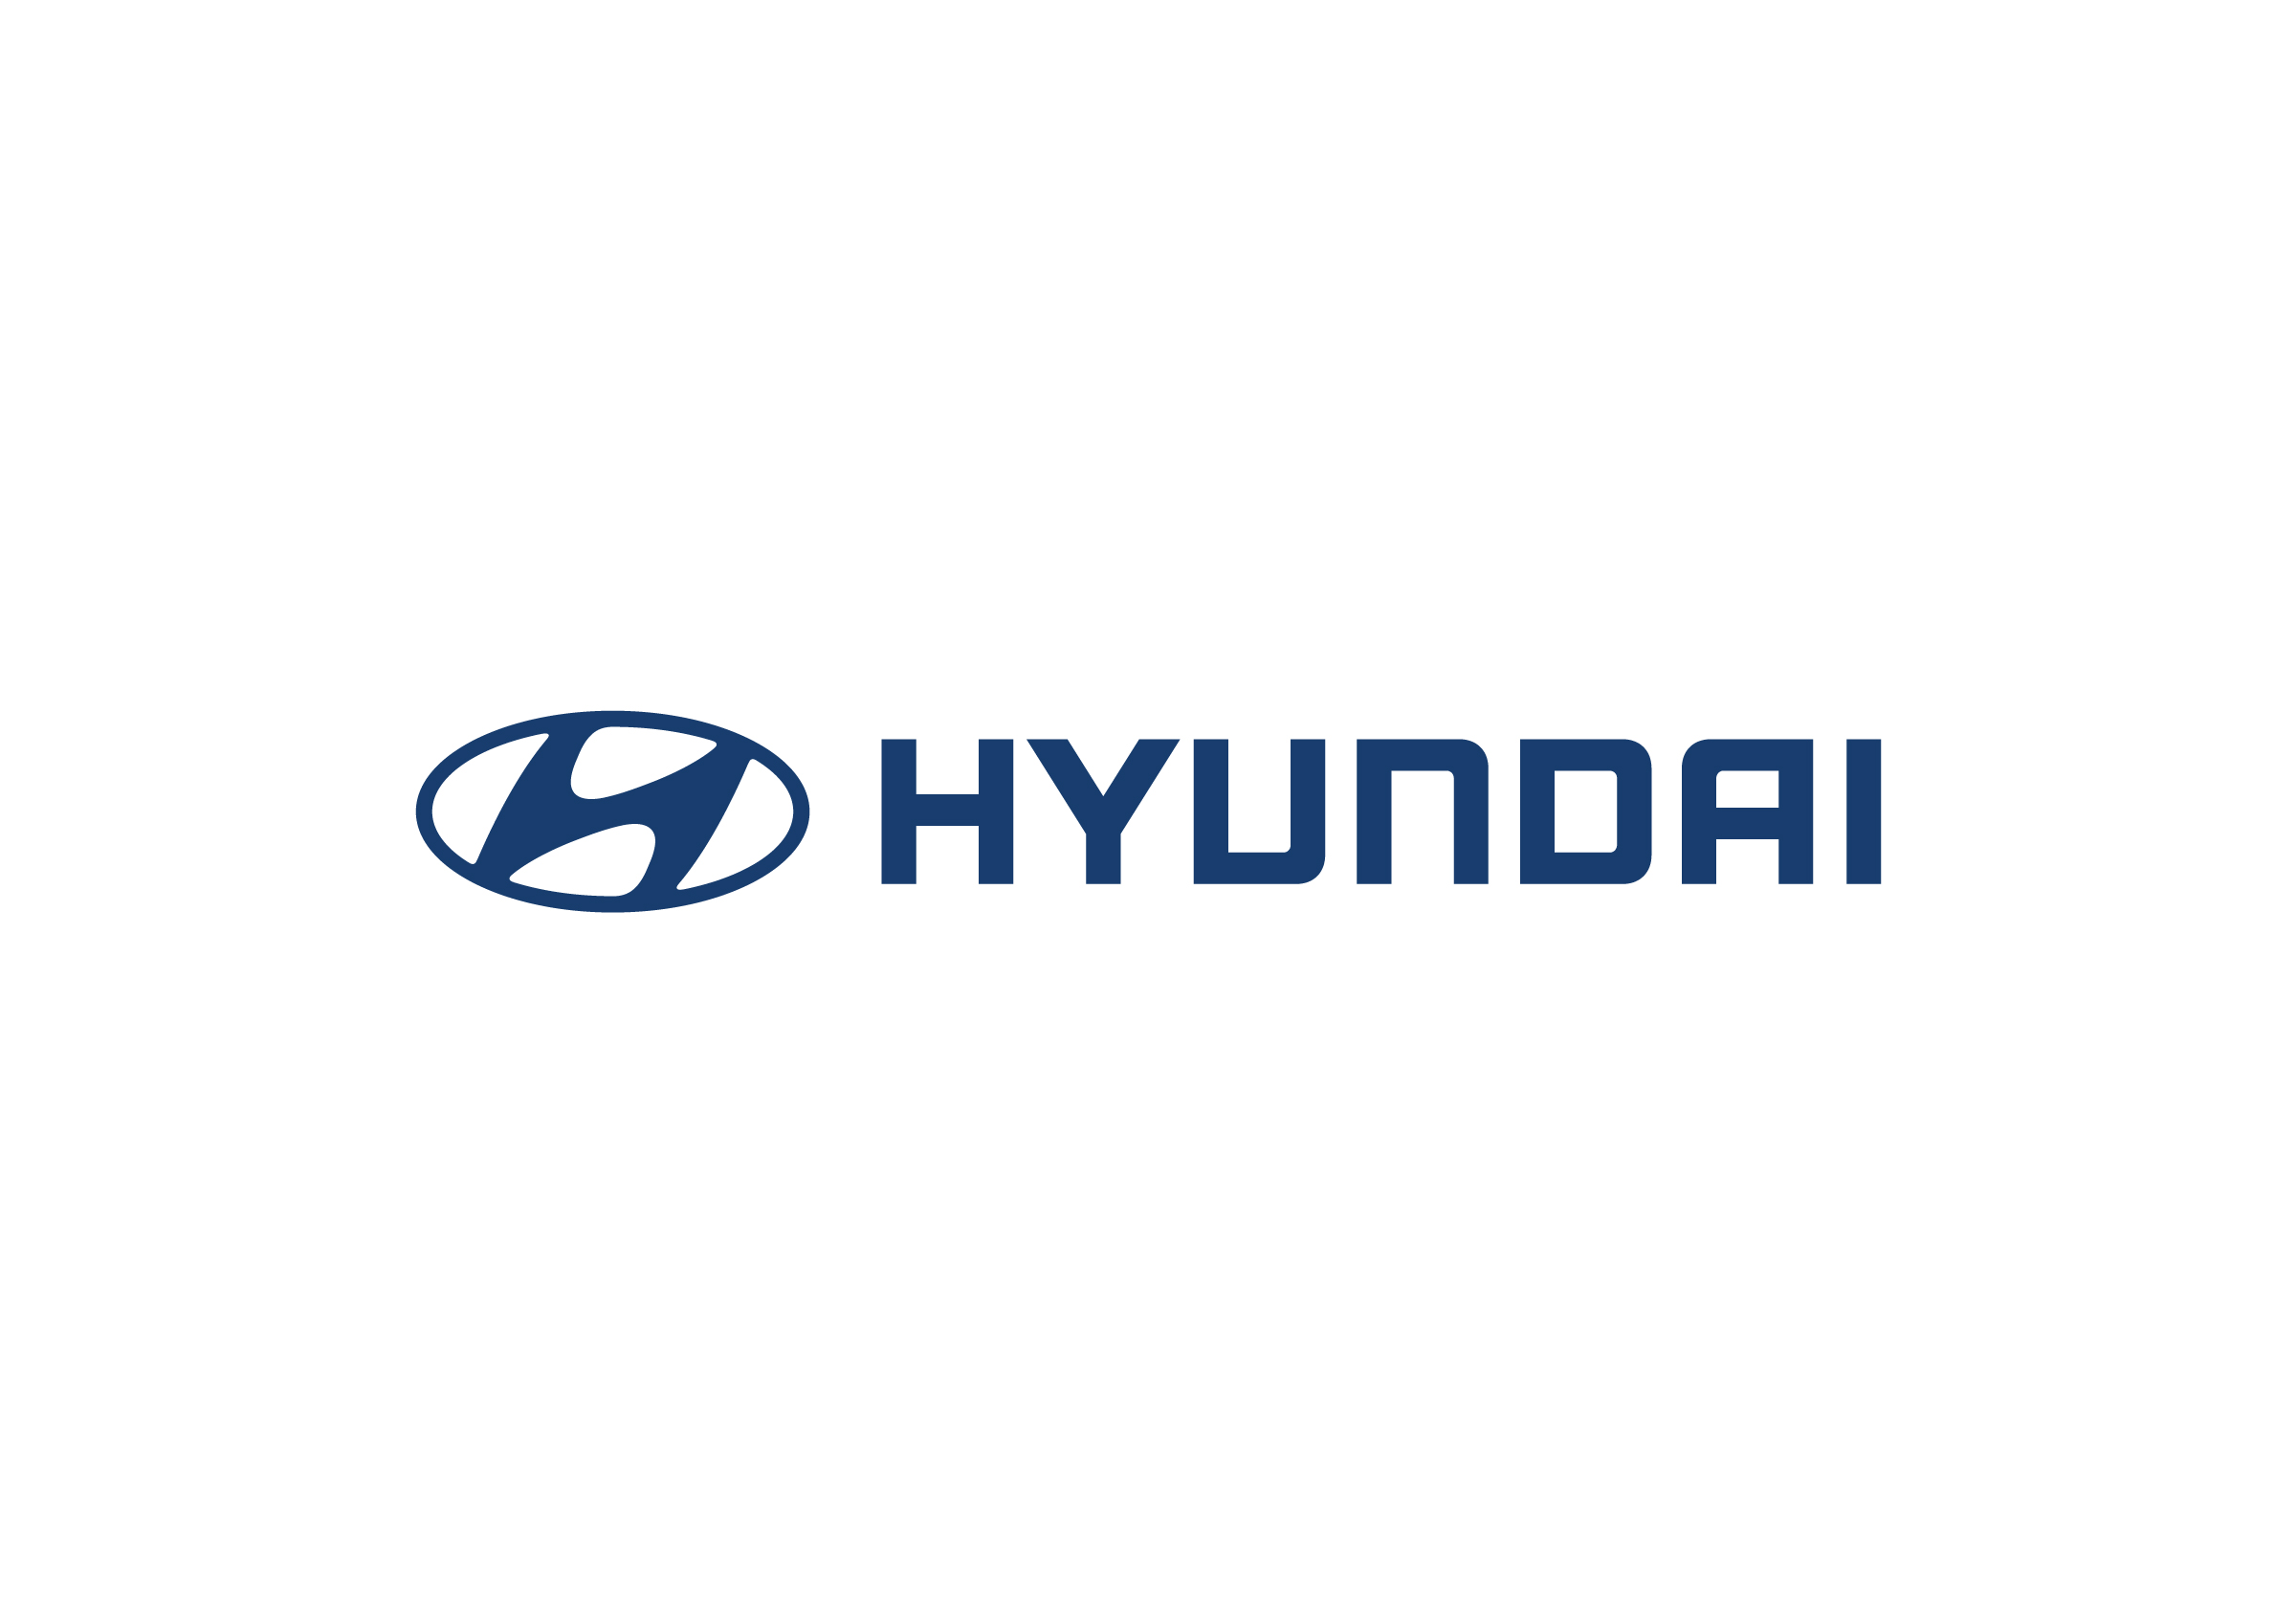 Design, progress and innovation: Hyundai’s future is already here